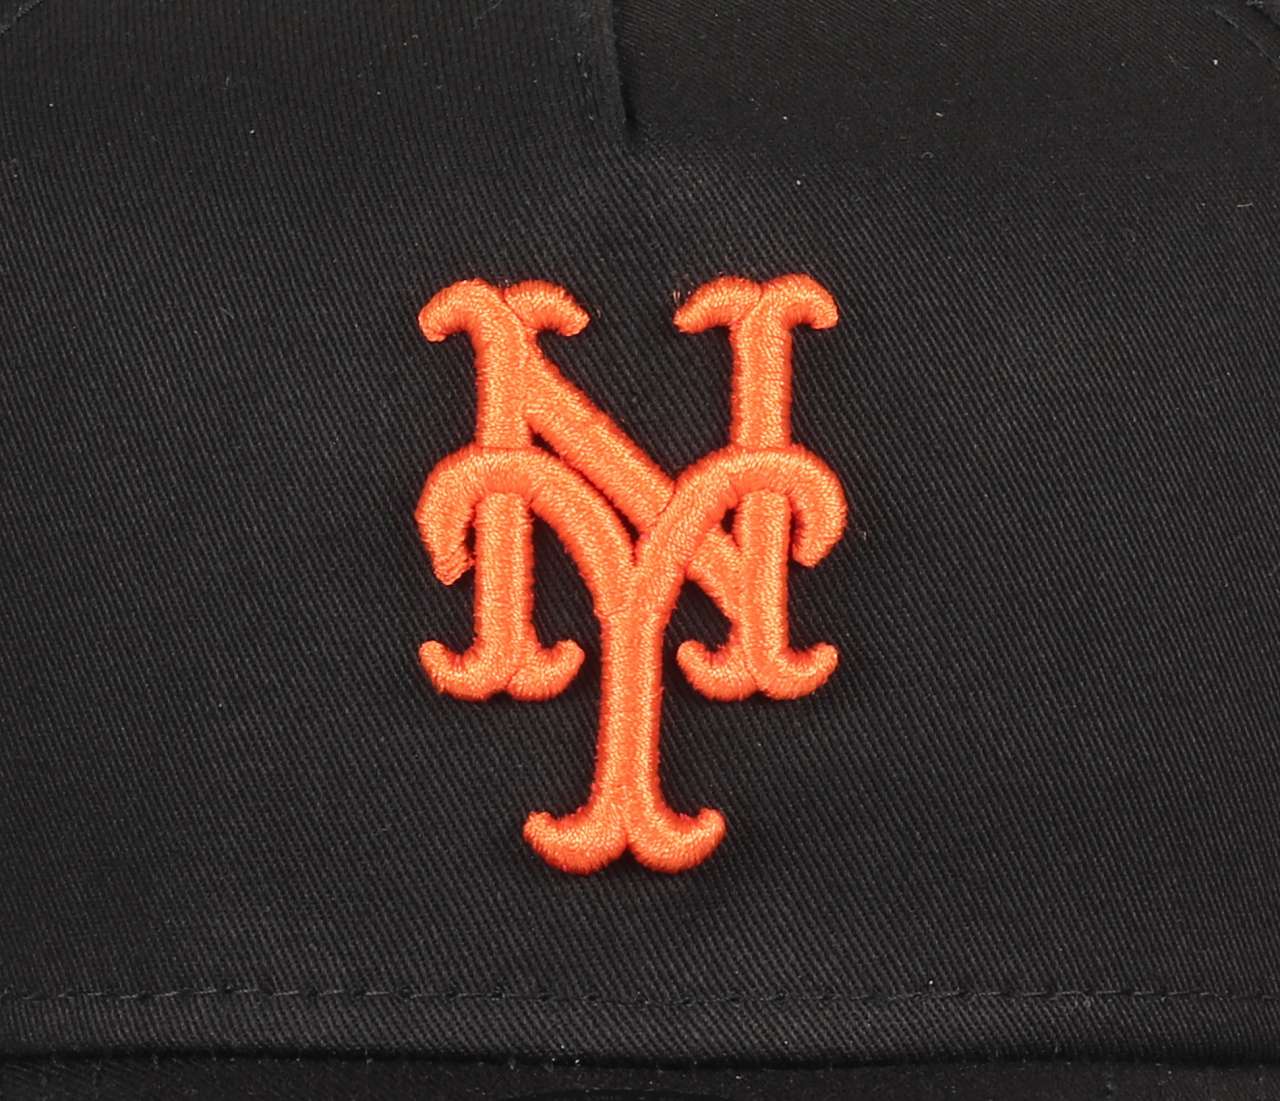  New York Mets MLB Black Coloured Team Logo Orange 9Forty A-Frame Snapback Cap New Era